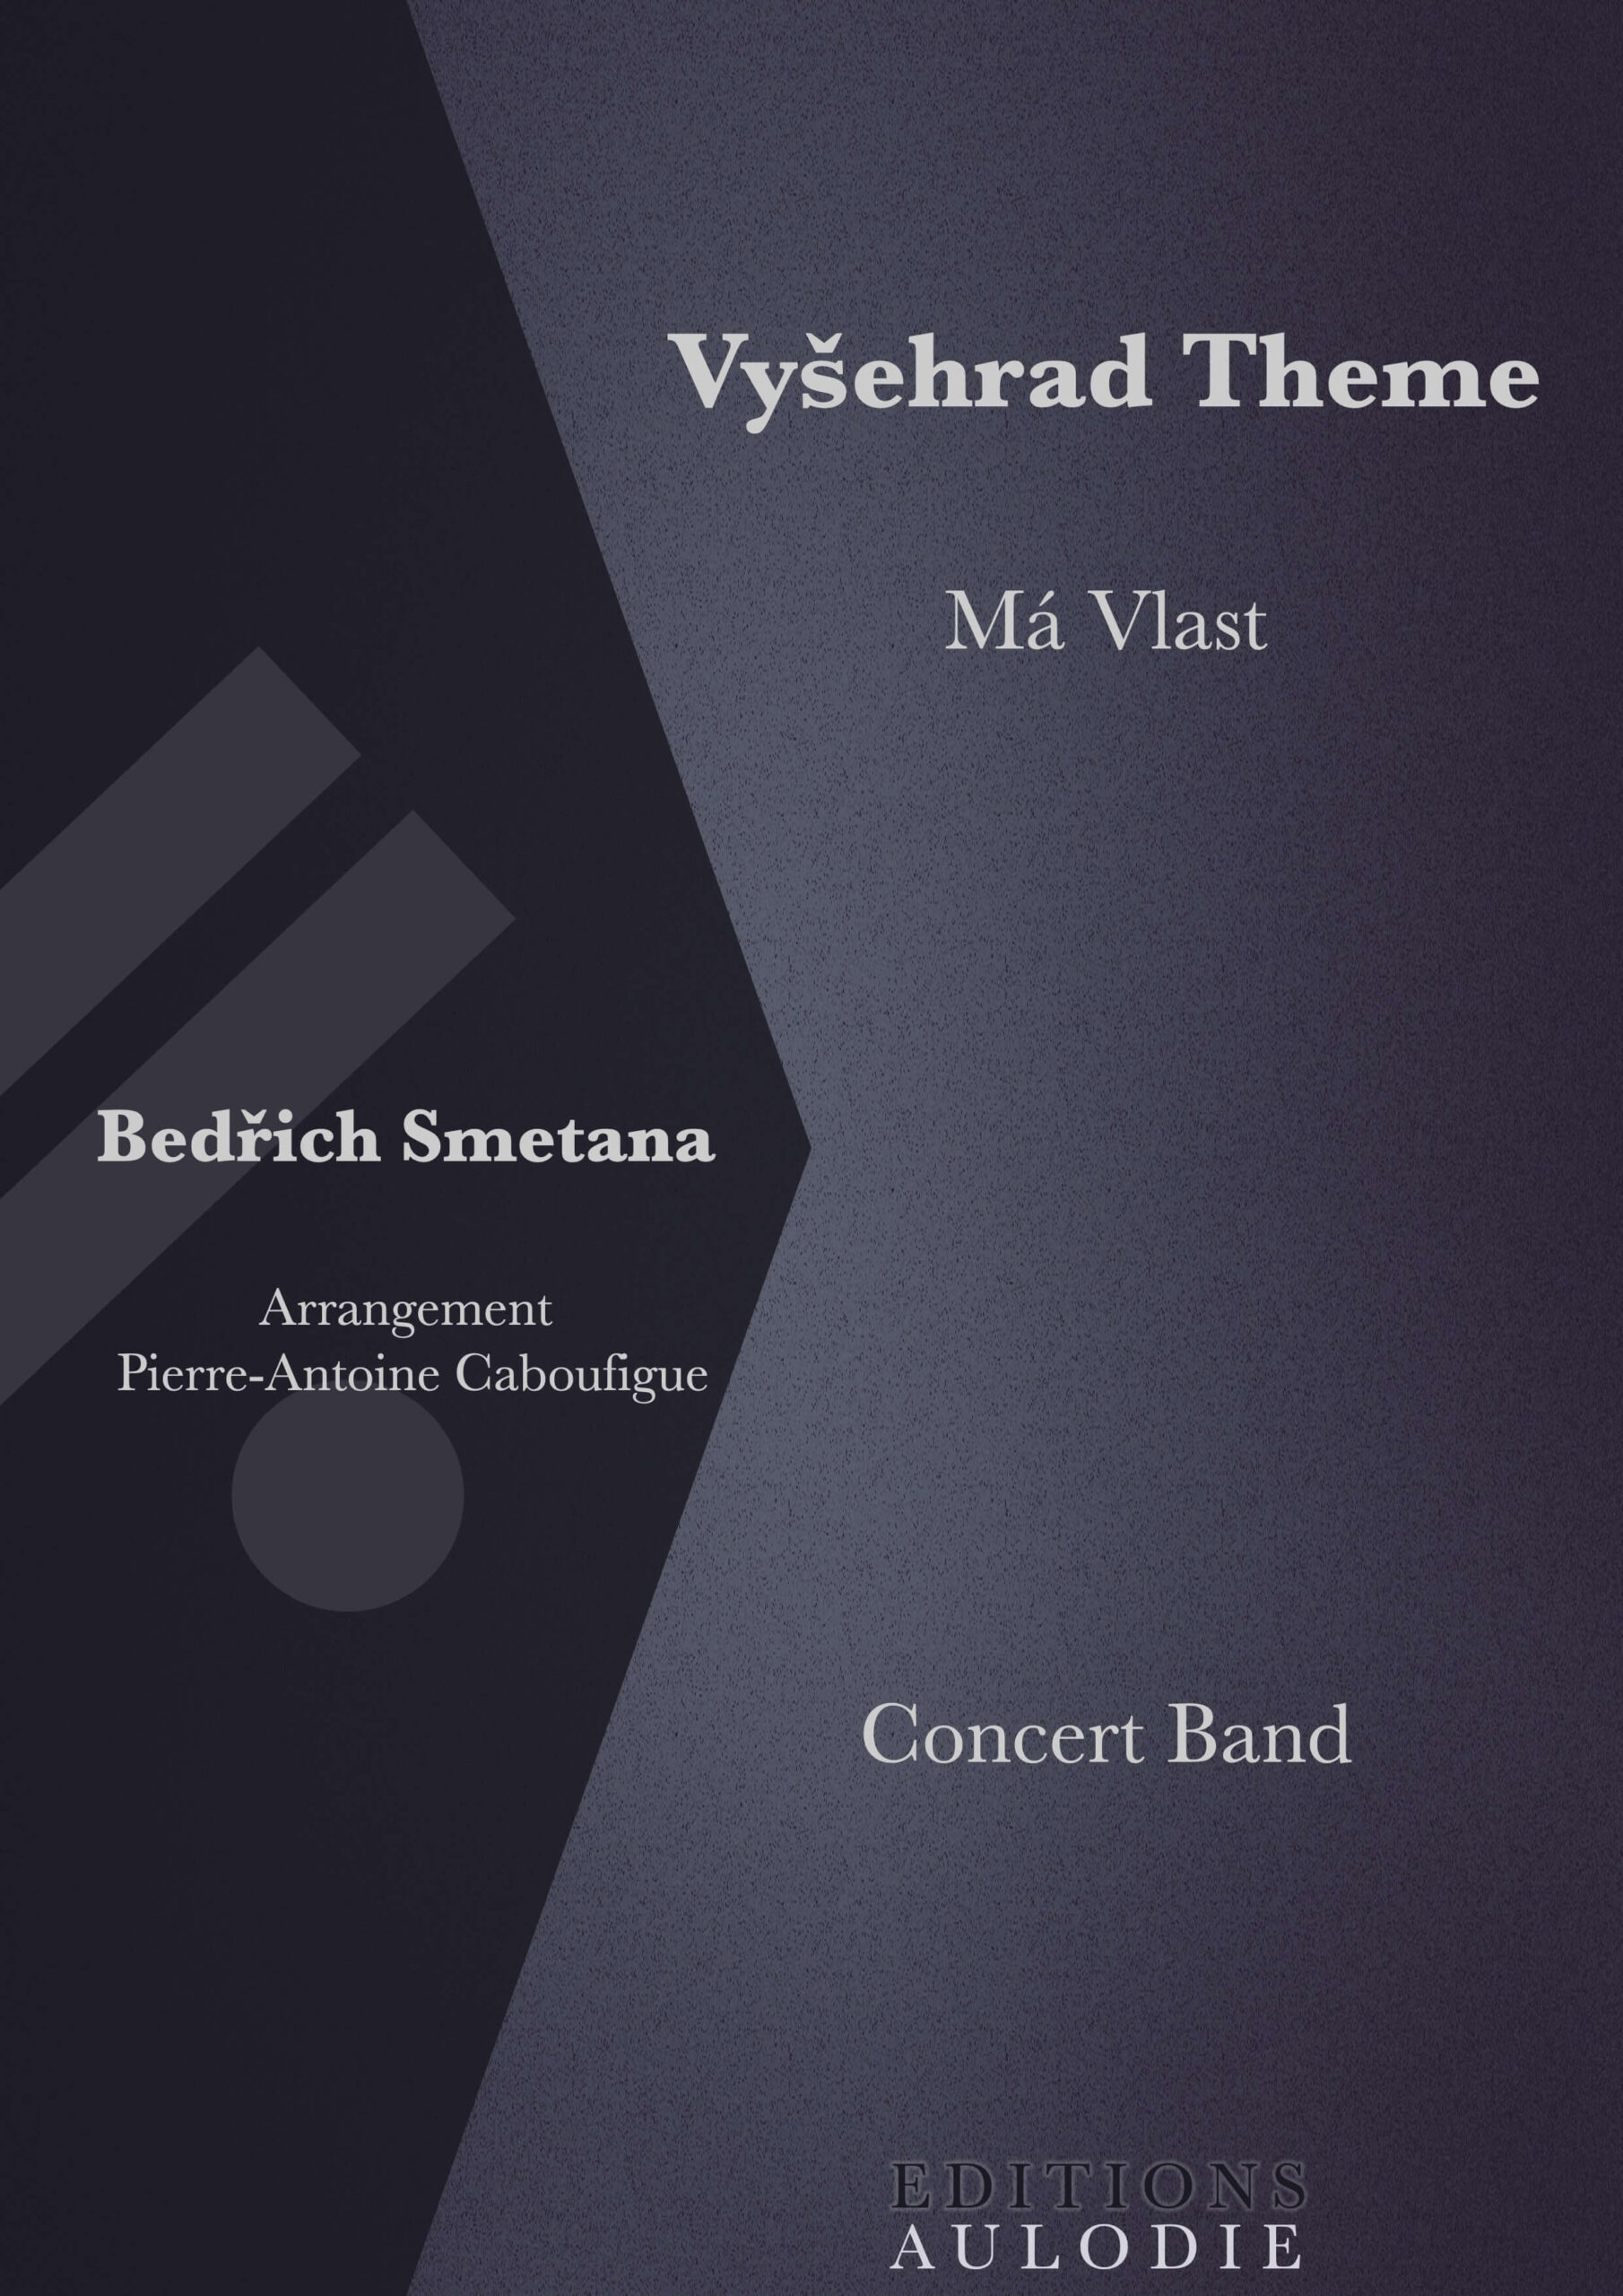 EA01008-Vysehrad_Theme-Ma_Vlast-Bedrich_Smetana-Concert_Band